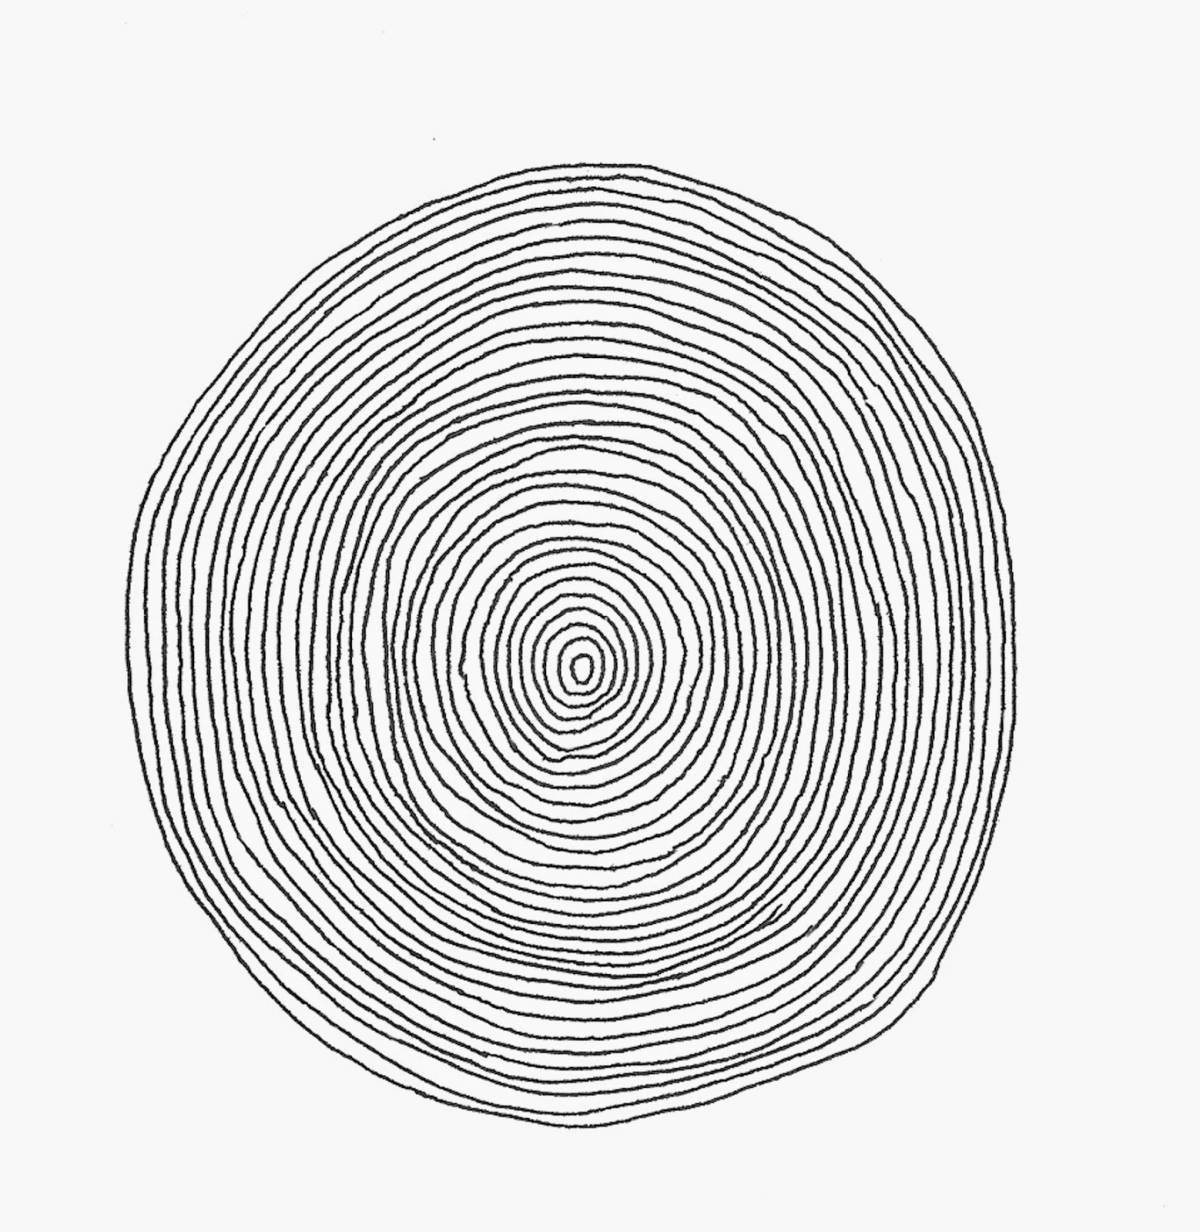 Coloring page nice circle spiral